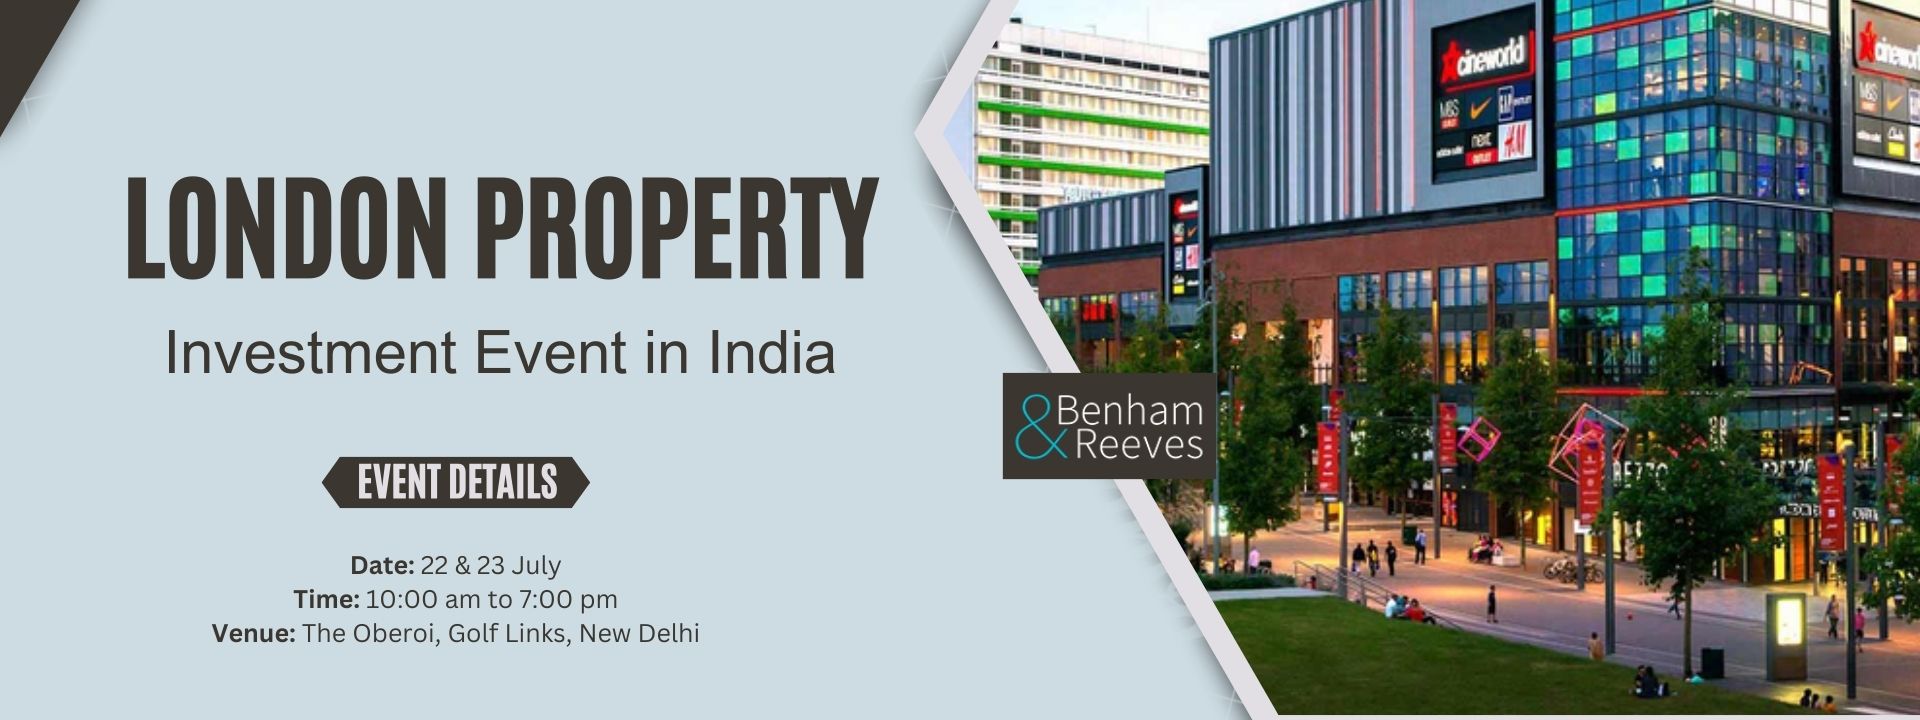 London Property Investment Event in India - Wembley Park Gardens, New Delhi, Delhi, India